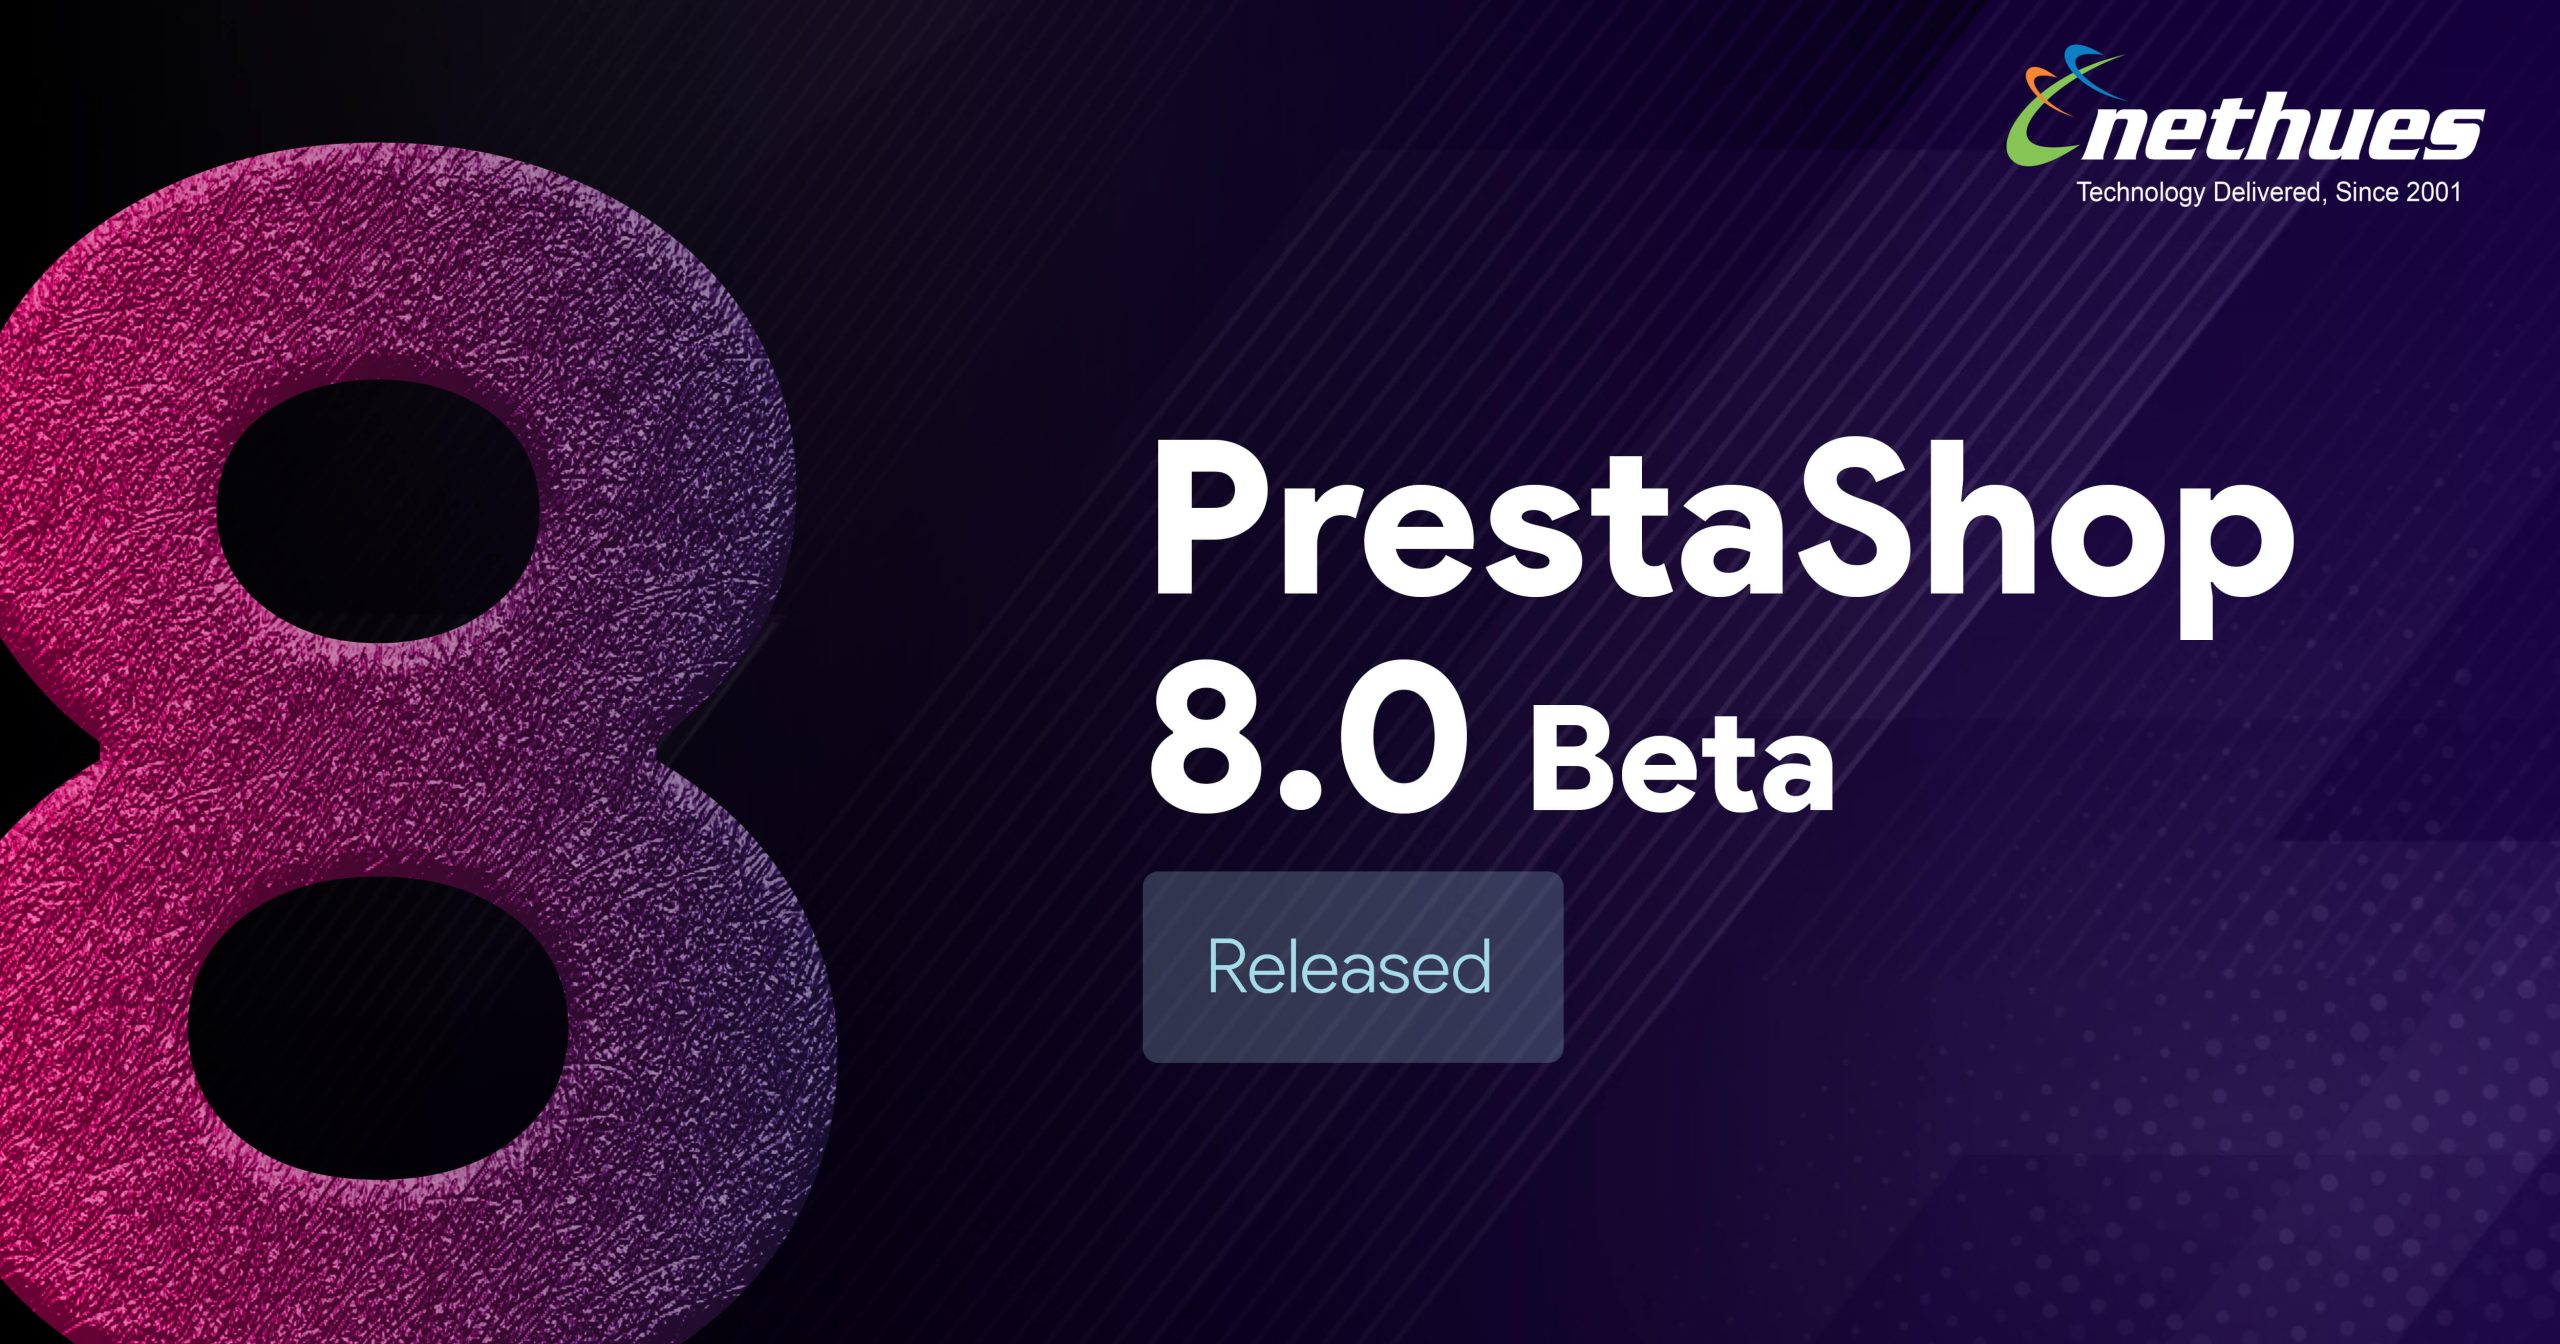 What’s New in PrestaShop 8.0 Beta?